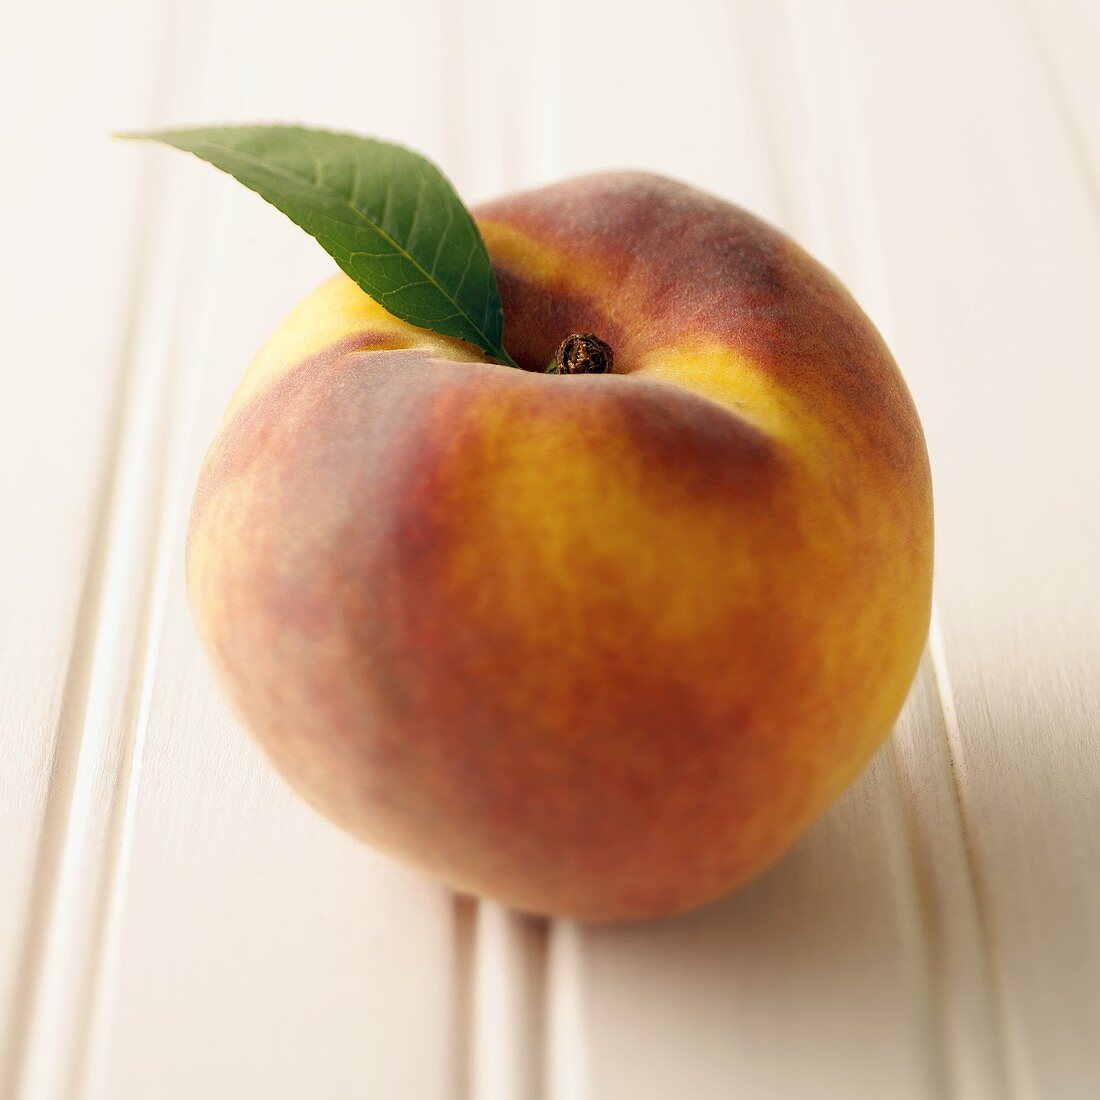 A Whole Peach with a Single Leaf